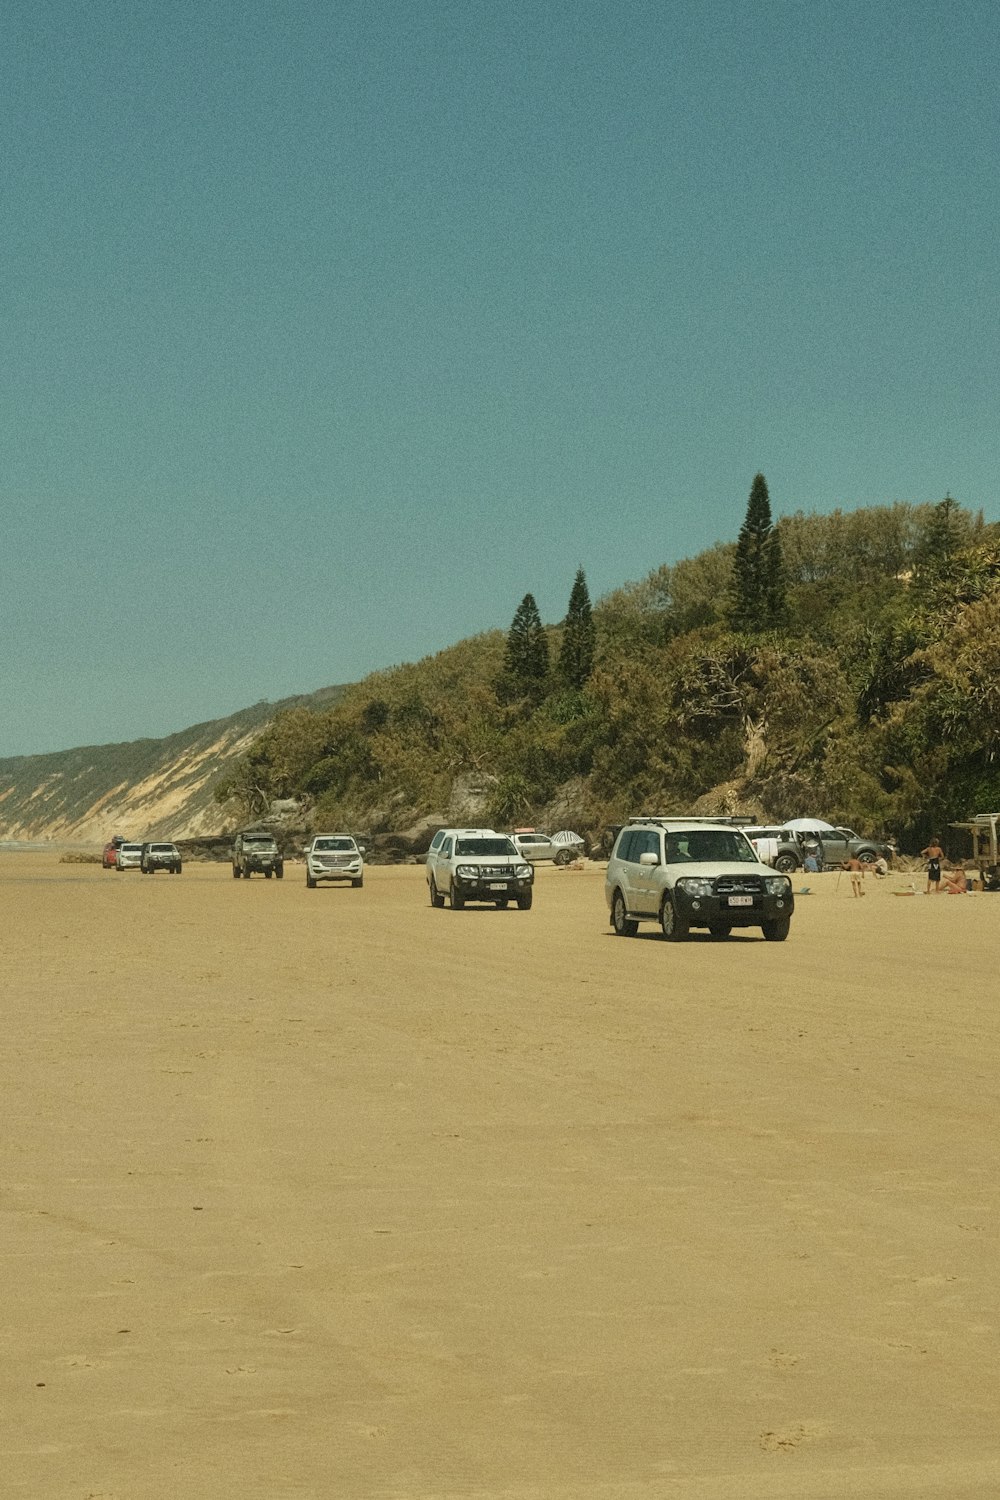 a group of cars parked on a sandy beach